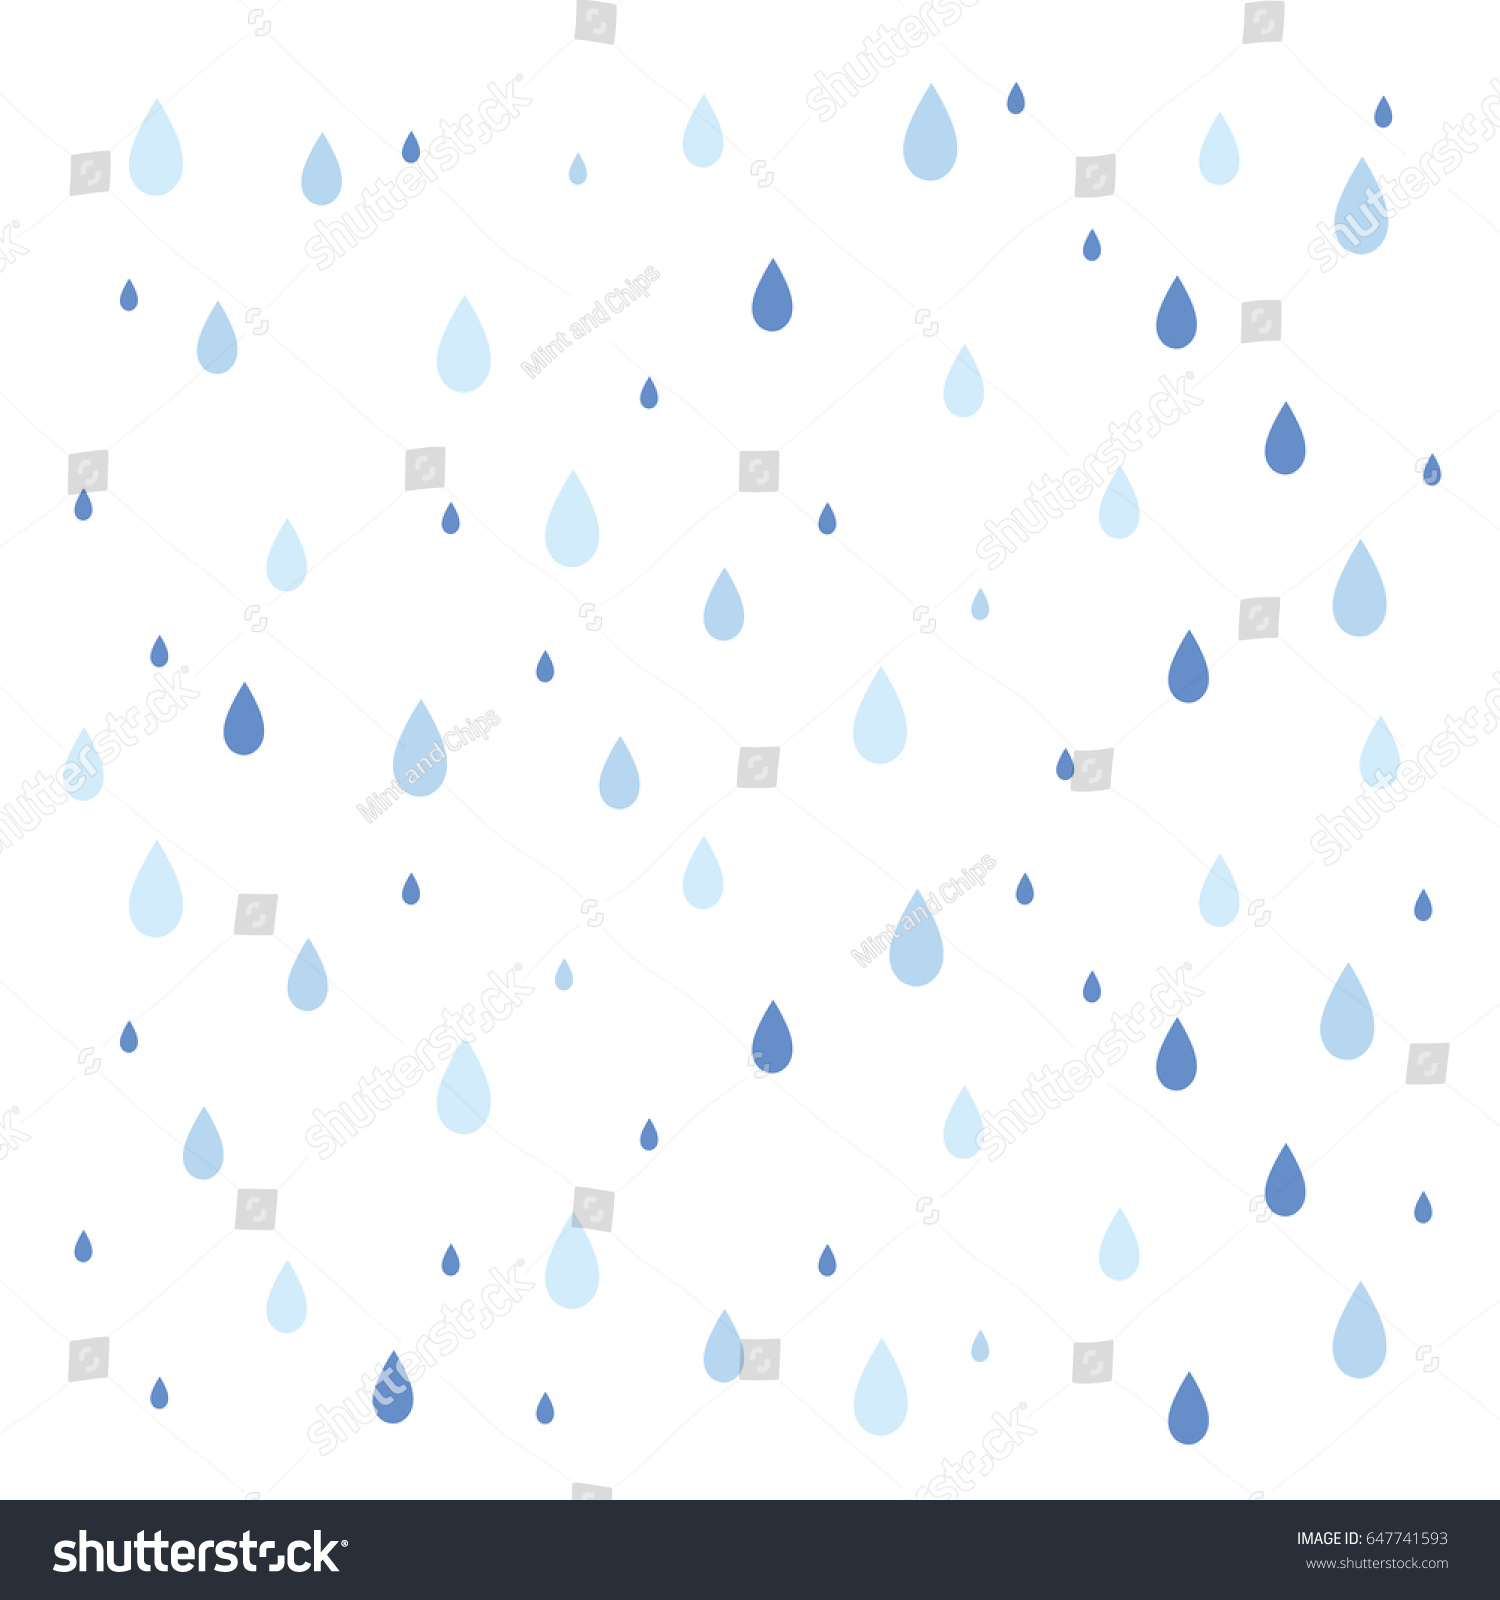 494,096 Rain drop pattern Images, Stock Photos & Vectors | Shutterstock